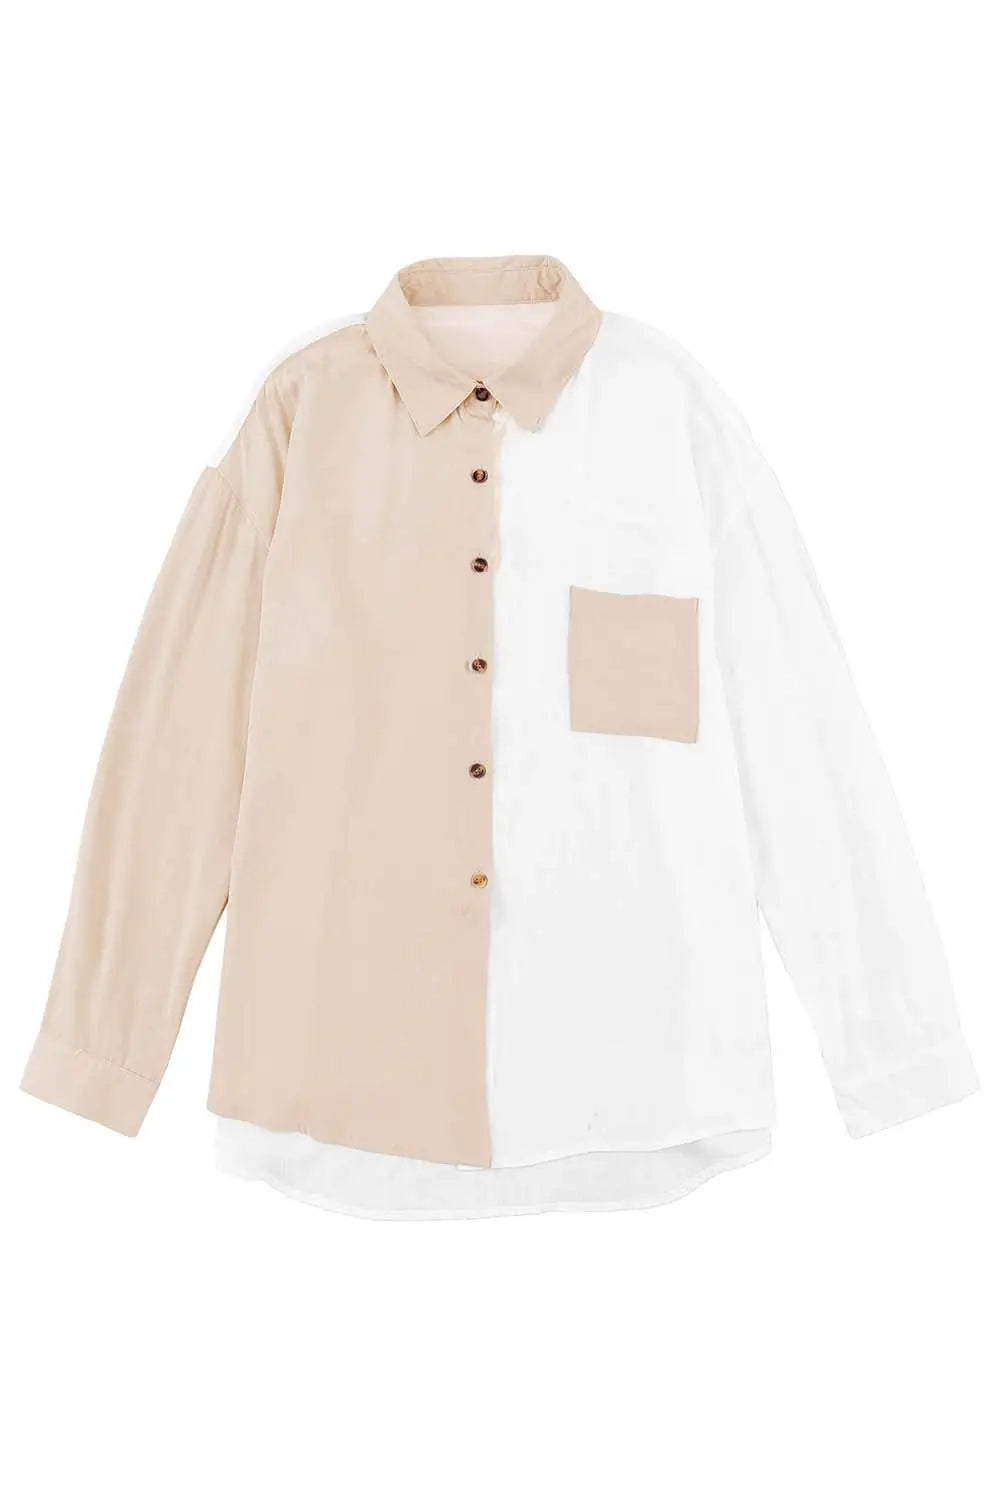 Khaki Colorblock Buttons Shirt-Collar Long Sleeve Pocket Blouse-11